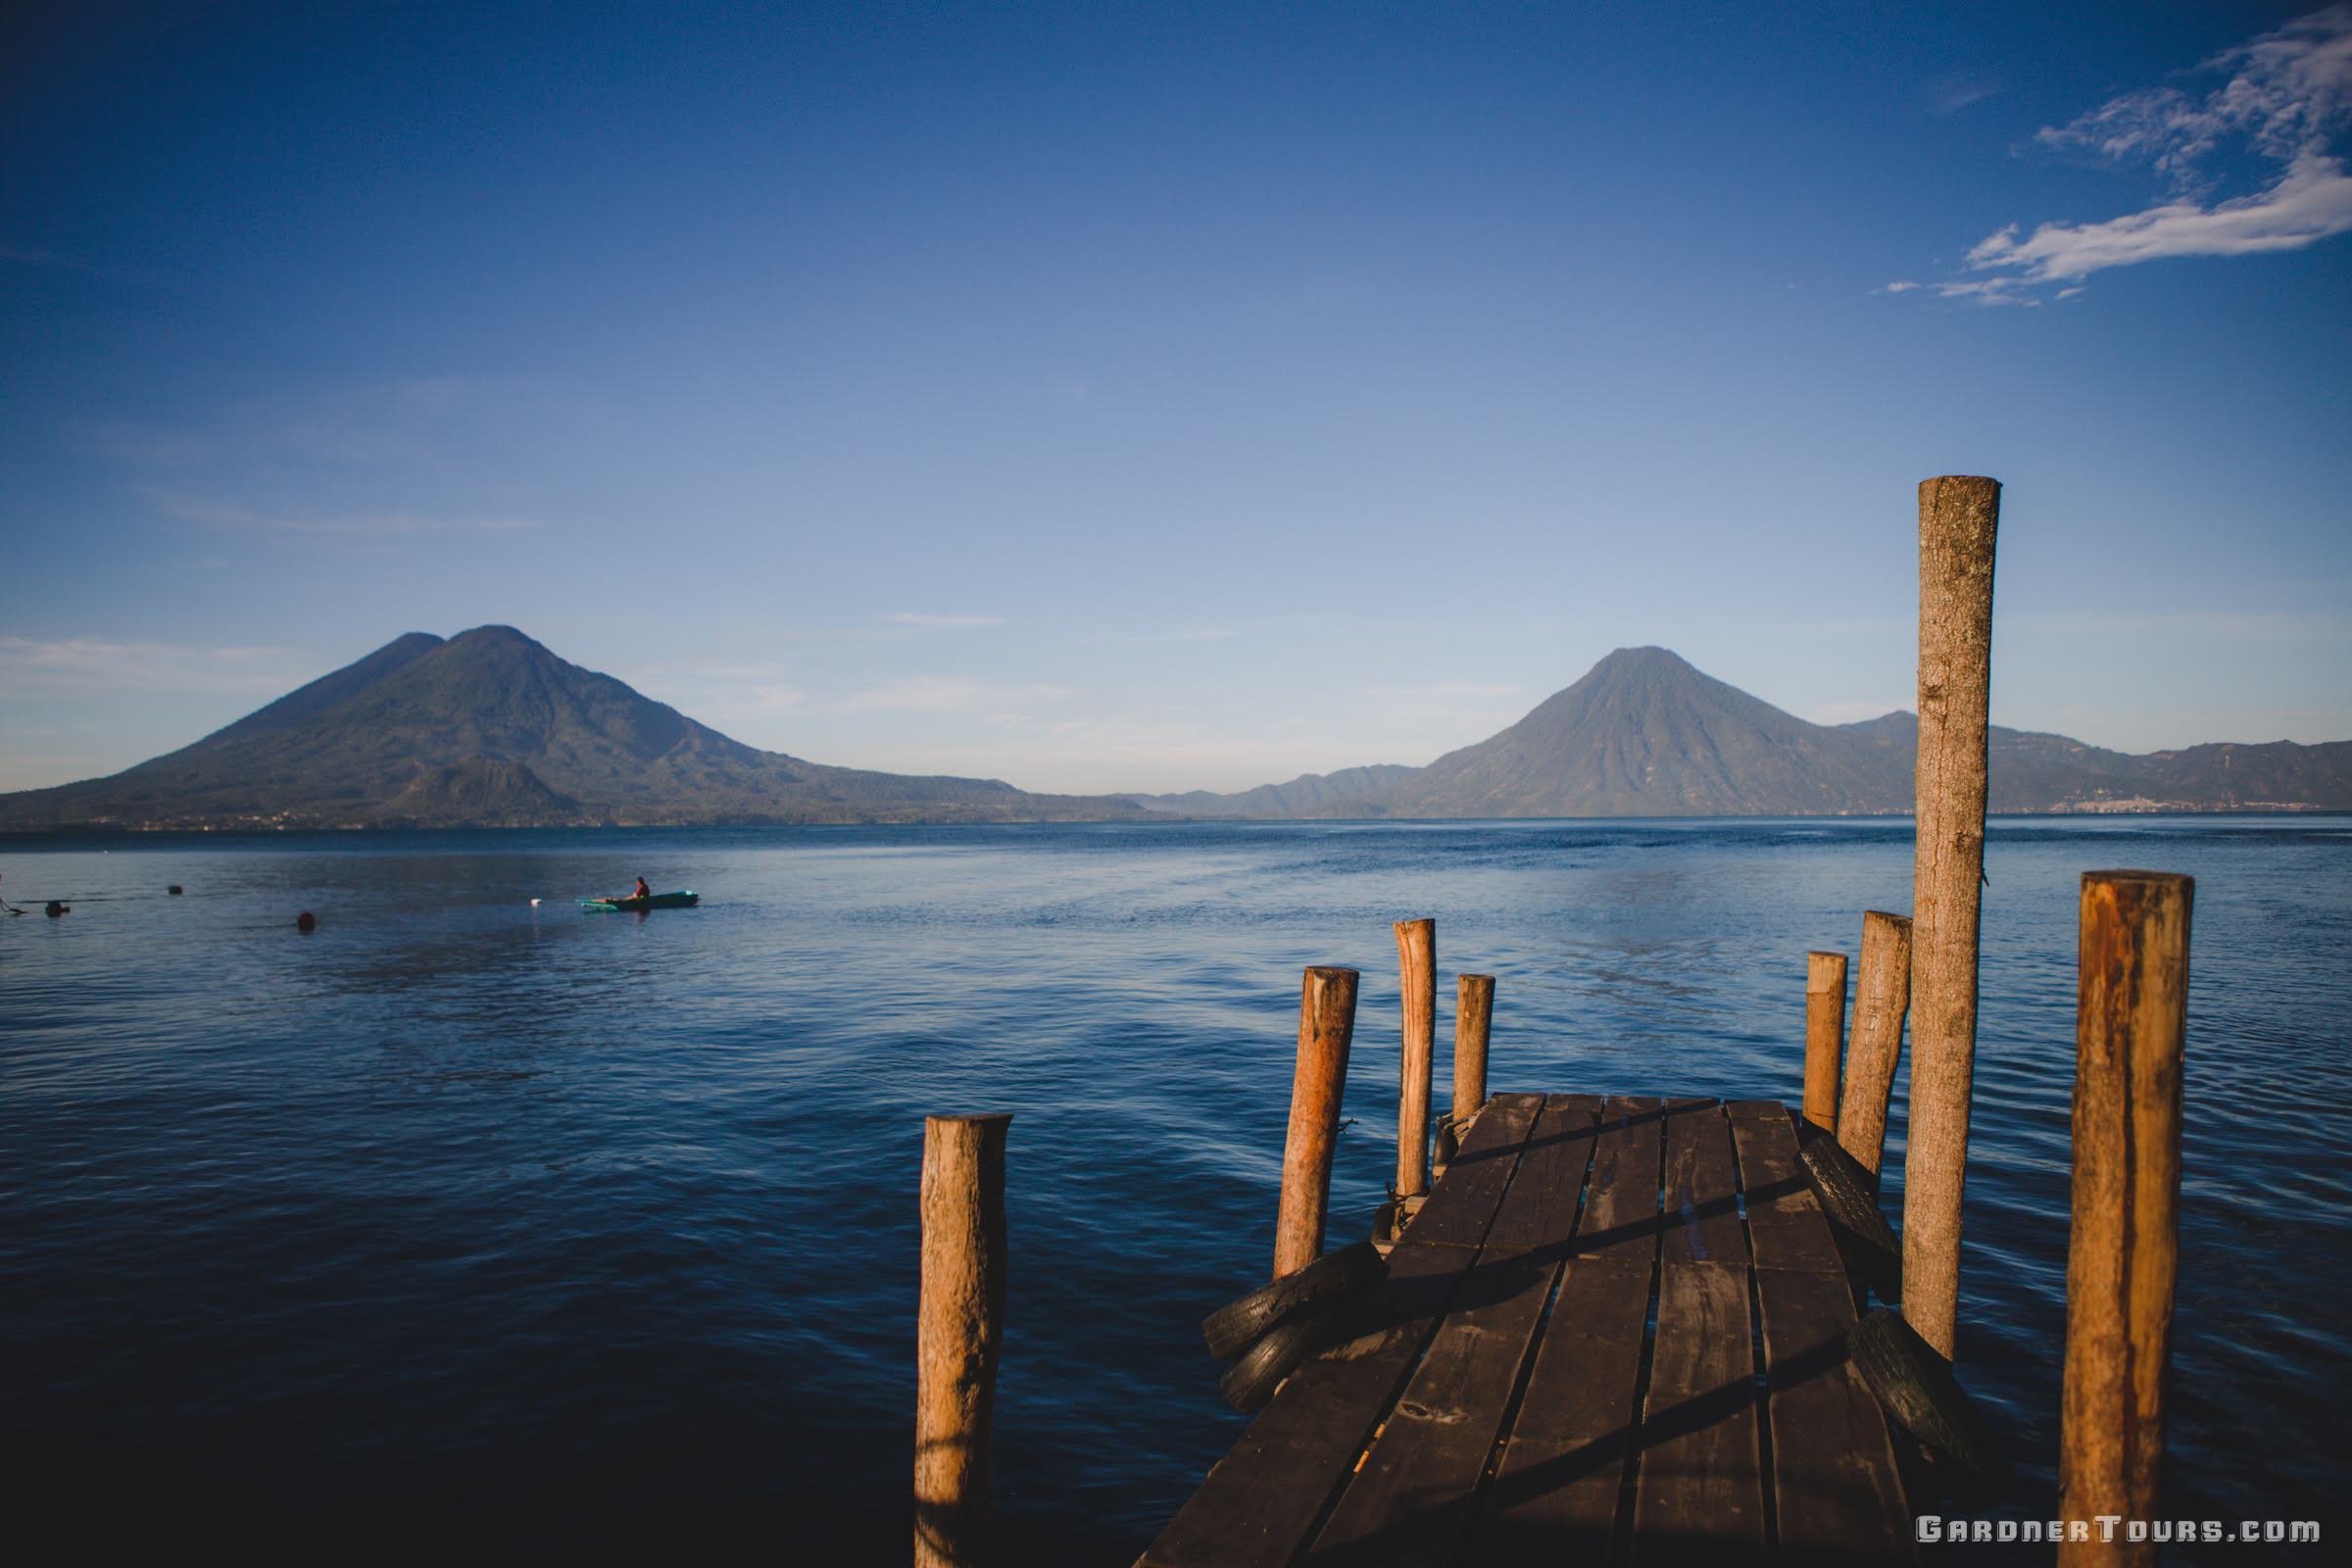 View of Two Volcanoes from Dock at Panajachel Lake Atitlan, Guatemala